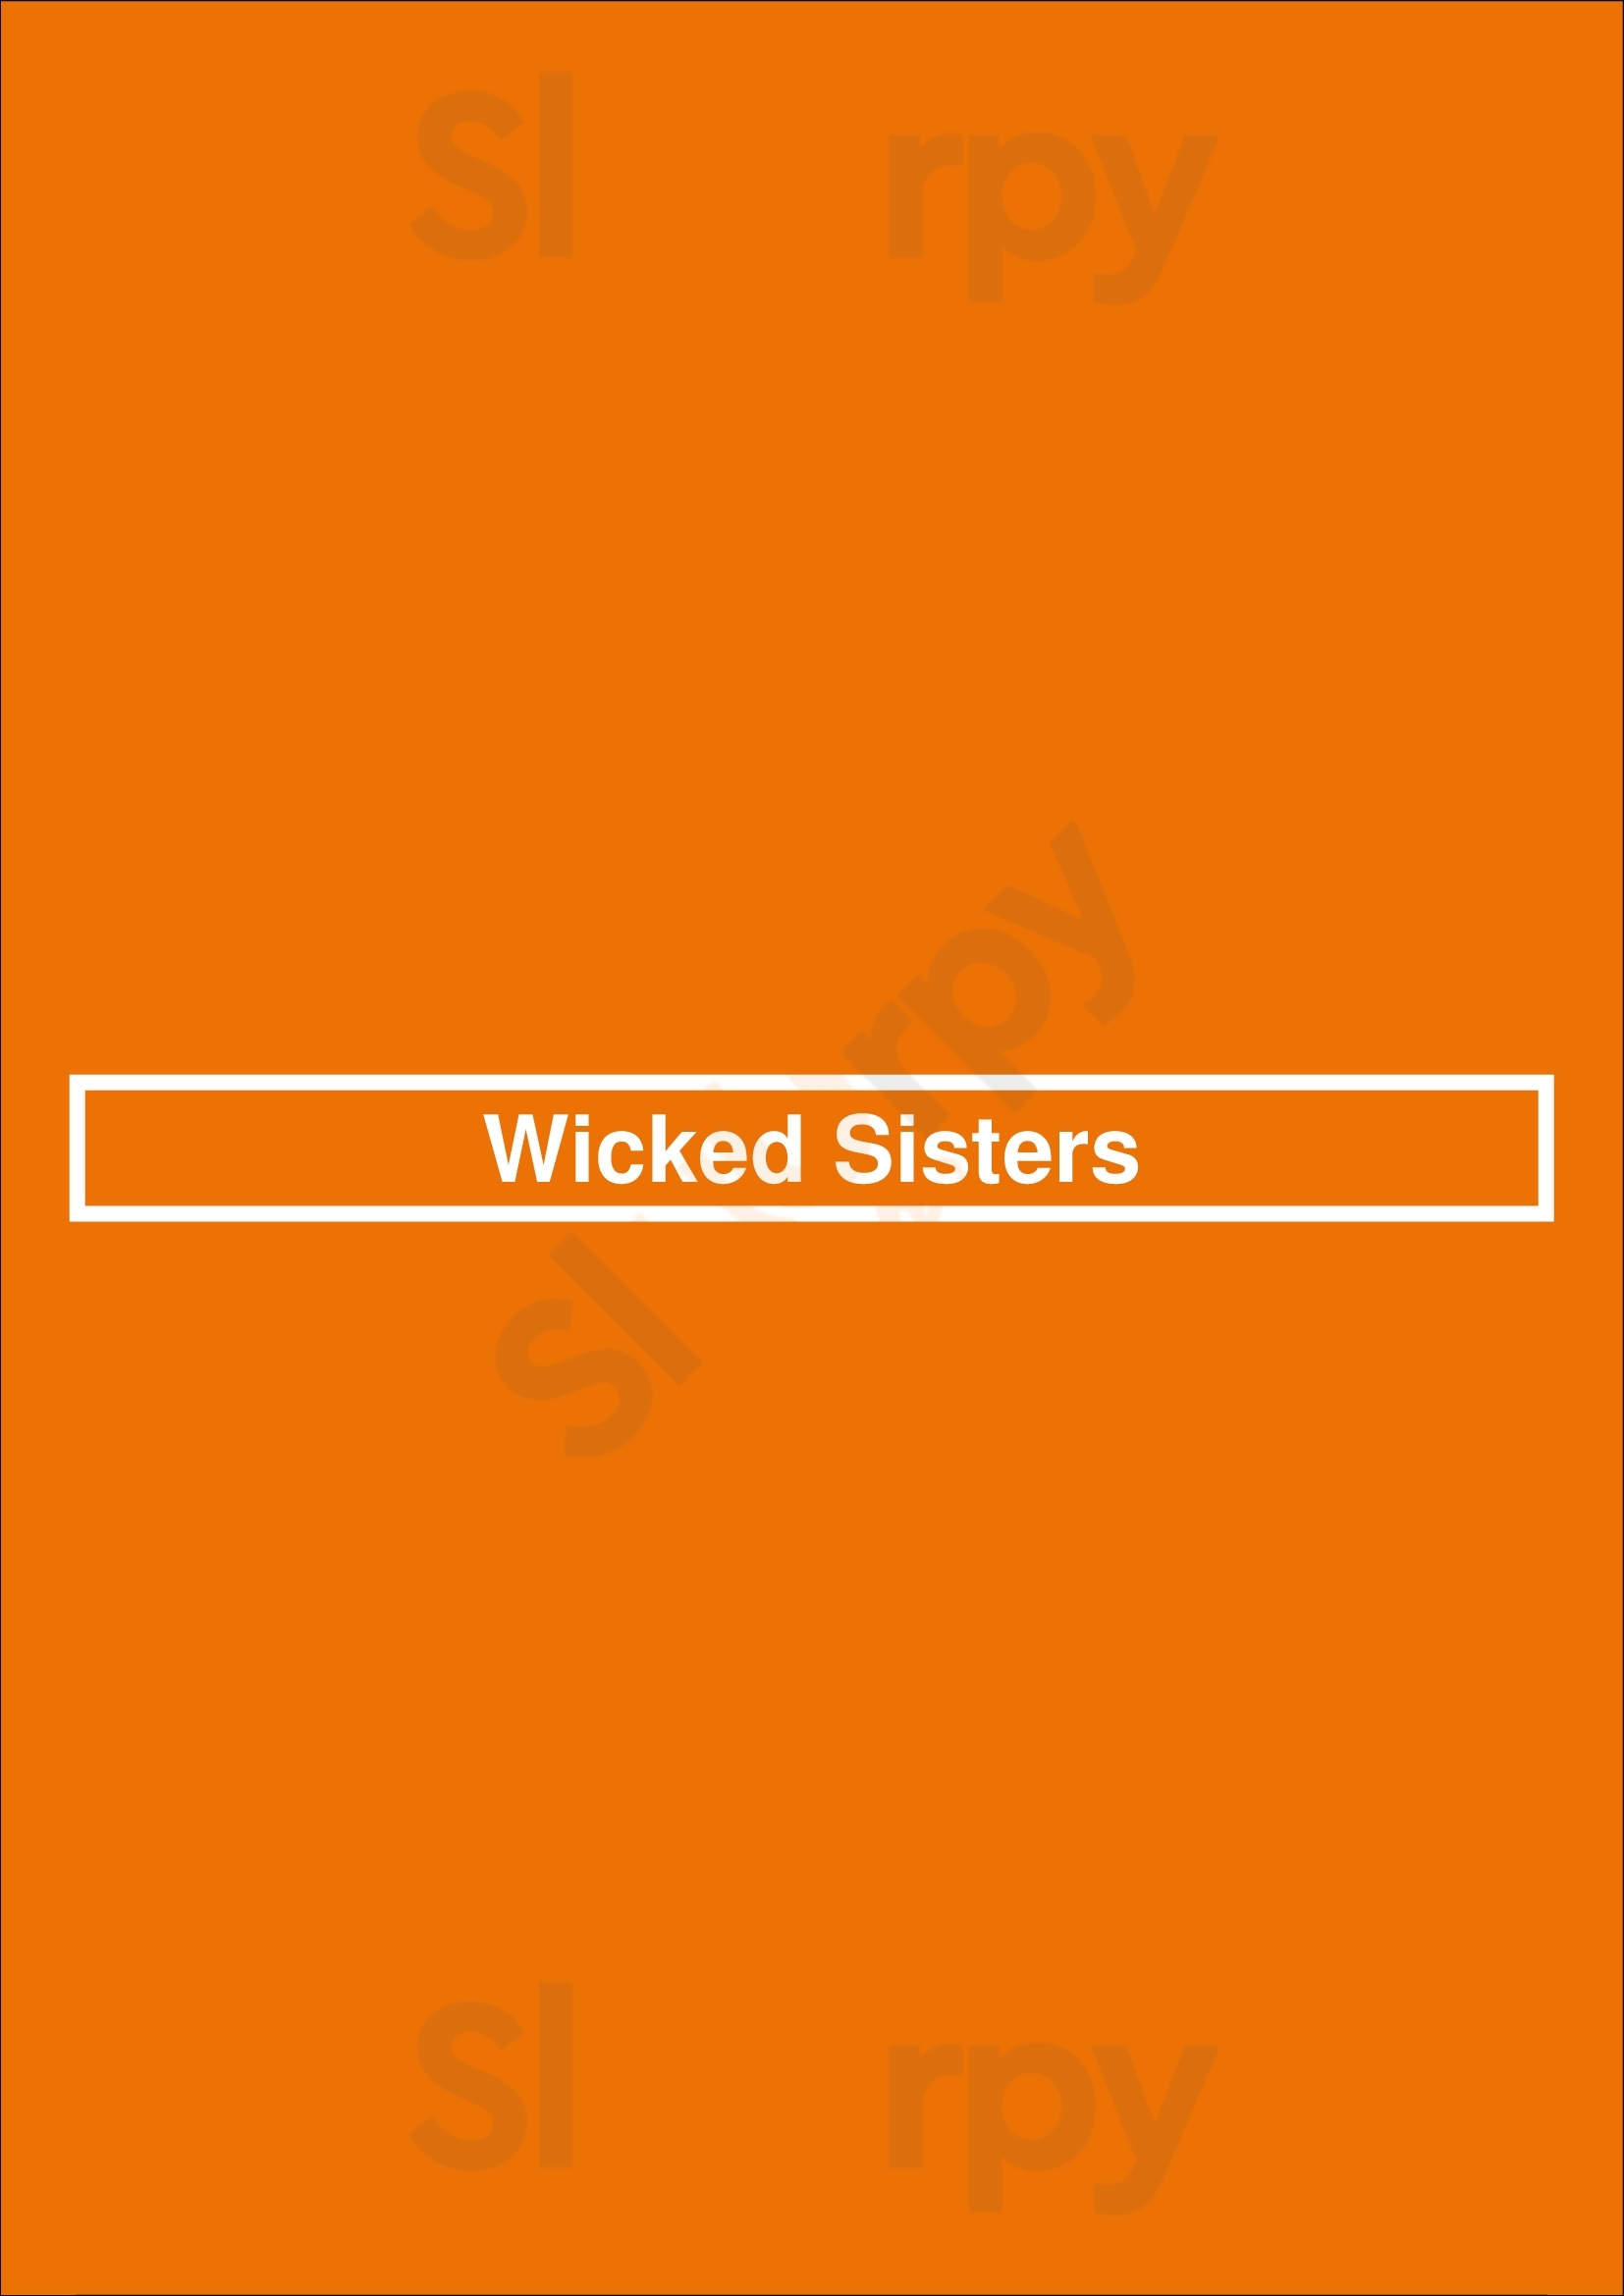 Wicked Sisters Baltimore Menu - 1